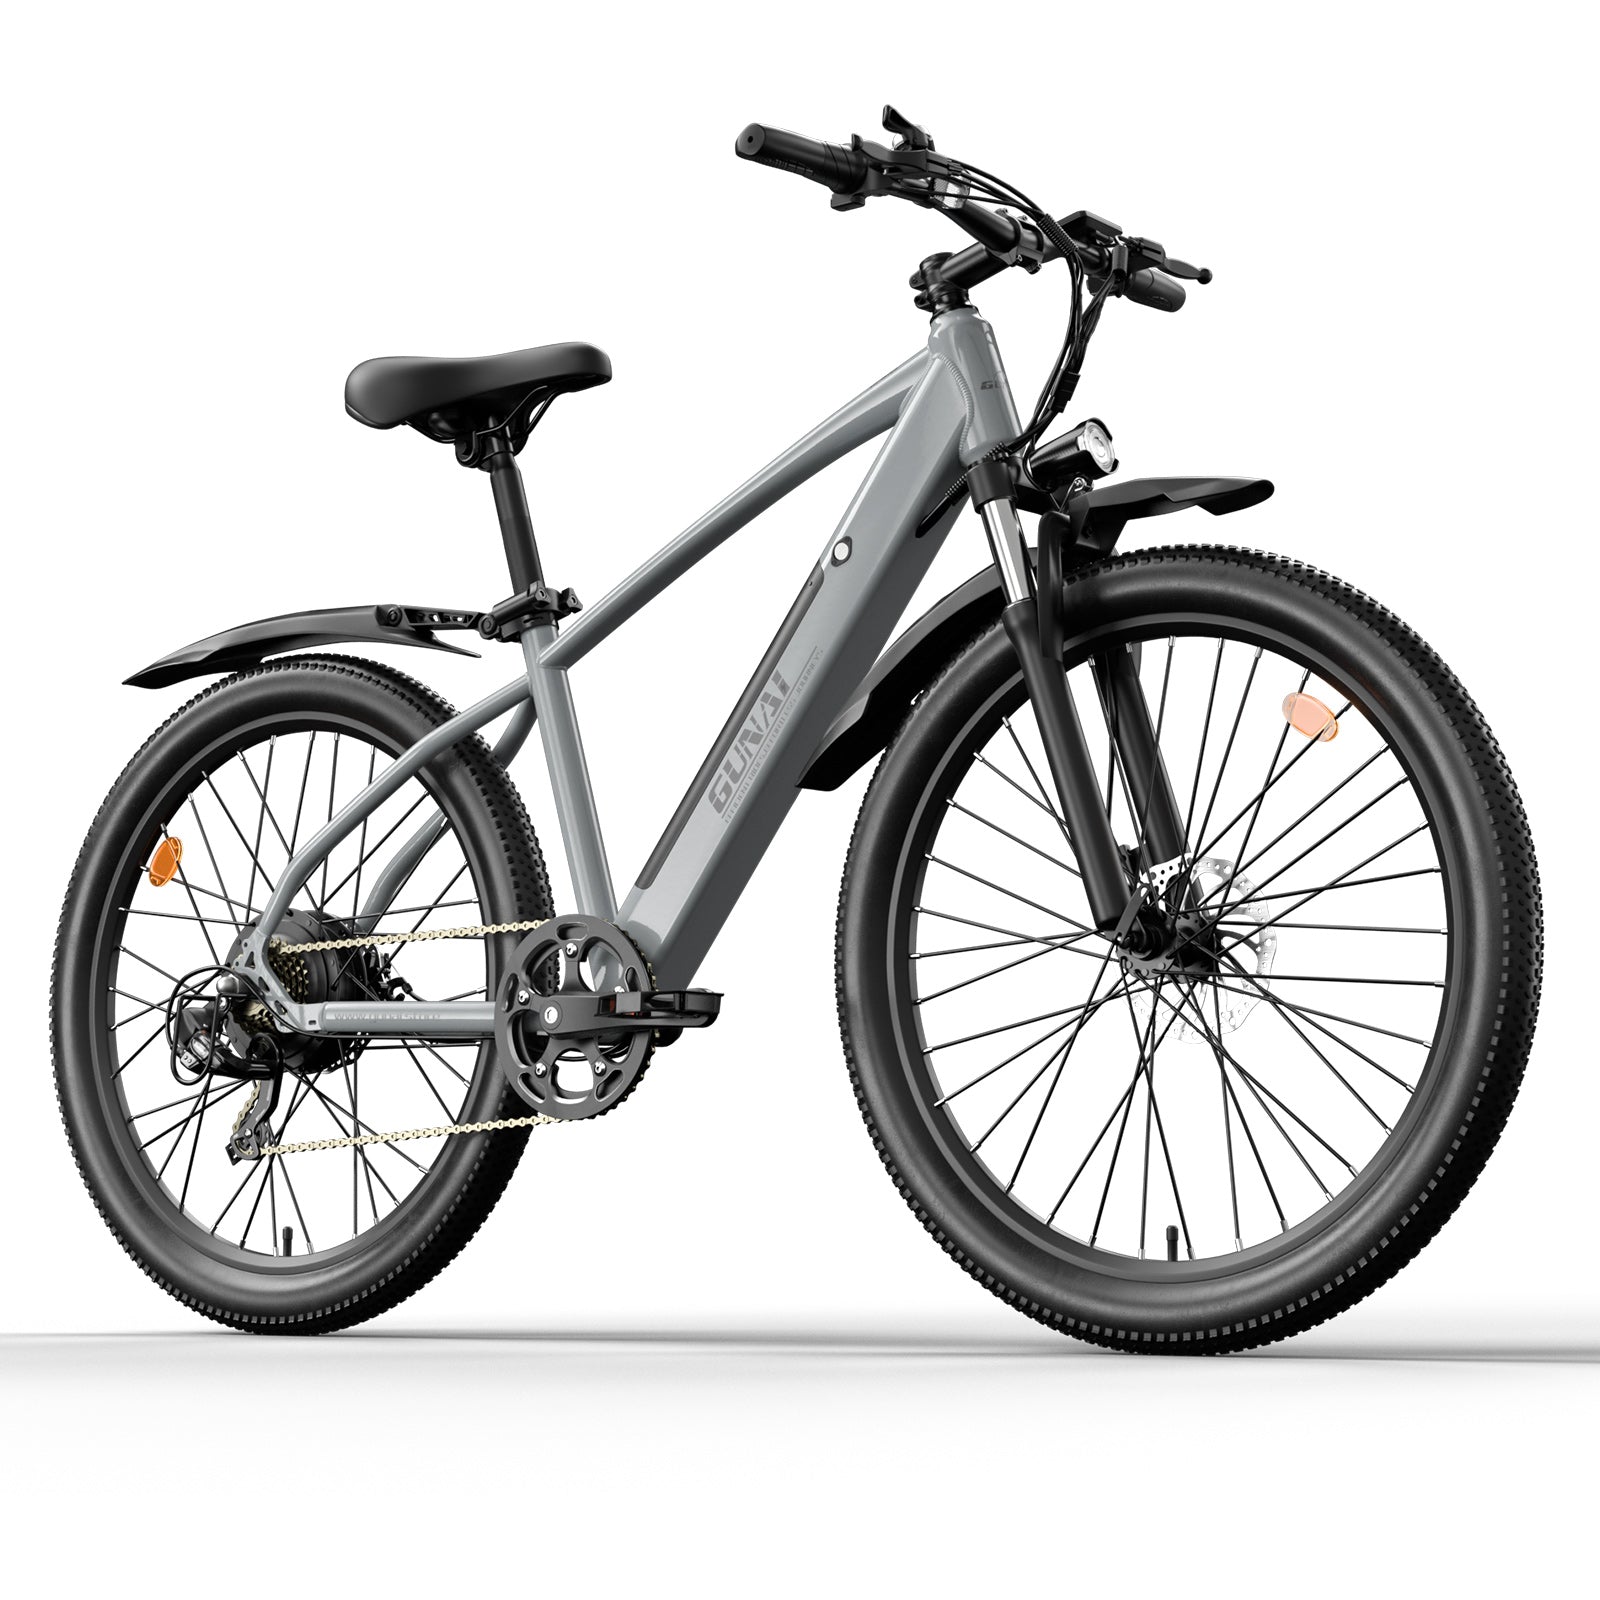 【New product】GUNAI GN27 Electric Bike  750W Electric Mountain Bike